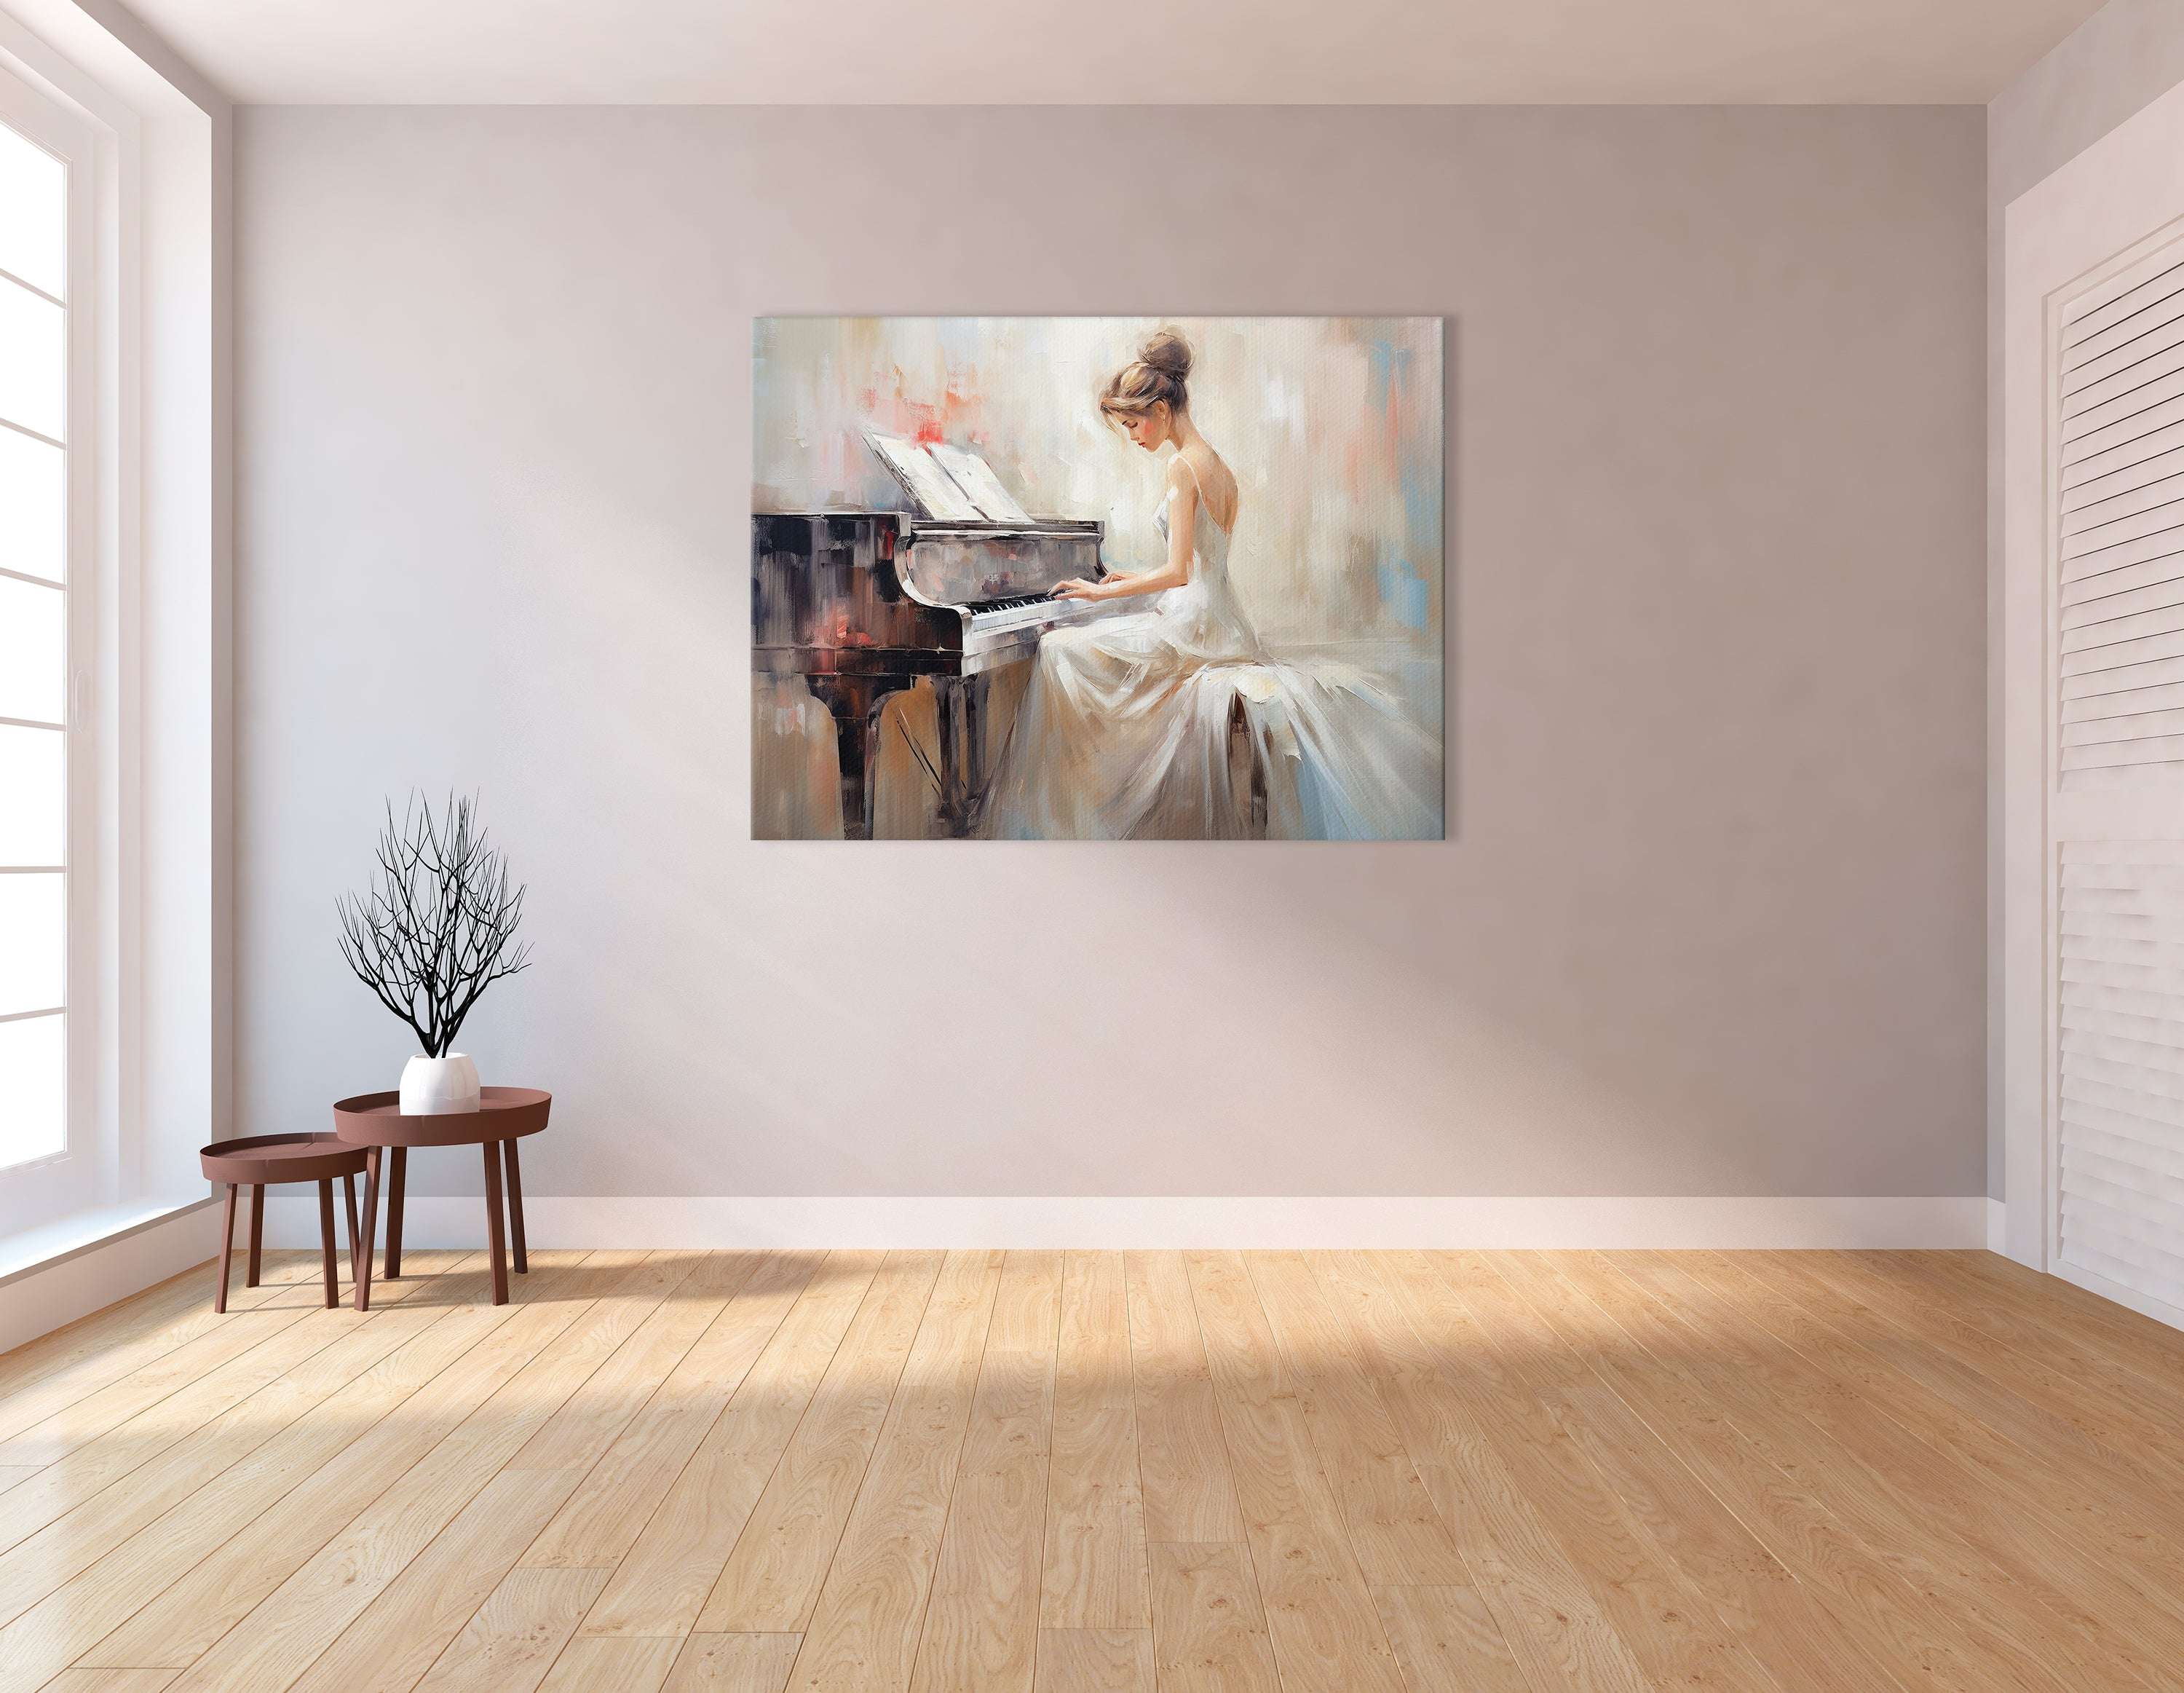 Woman in a White Dress Playing Piano - Canvas Print - Artoholica Ready to Hang Canvas Print